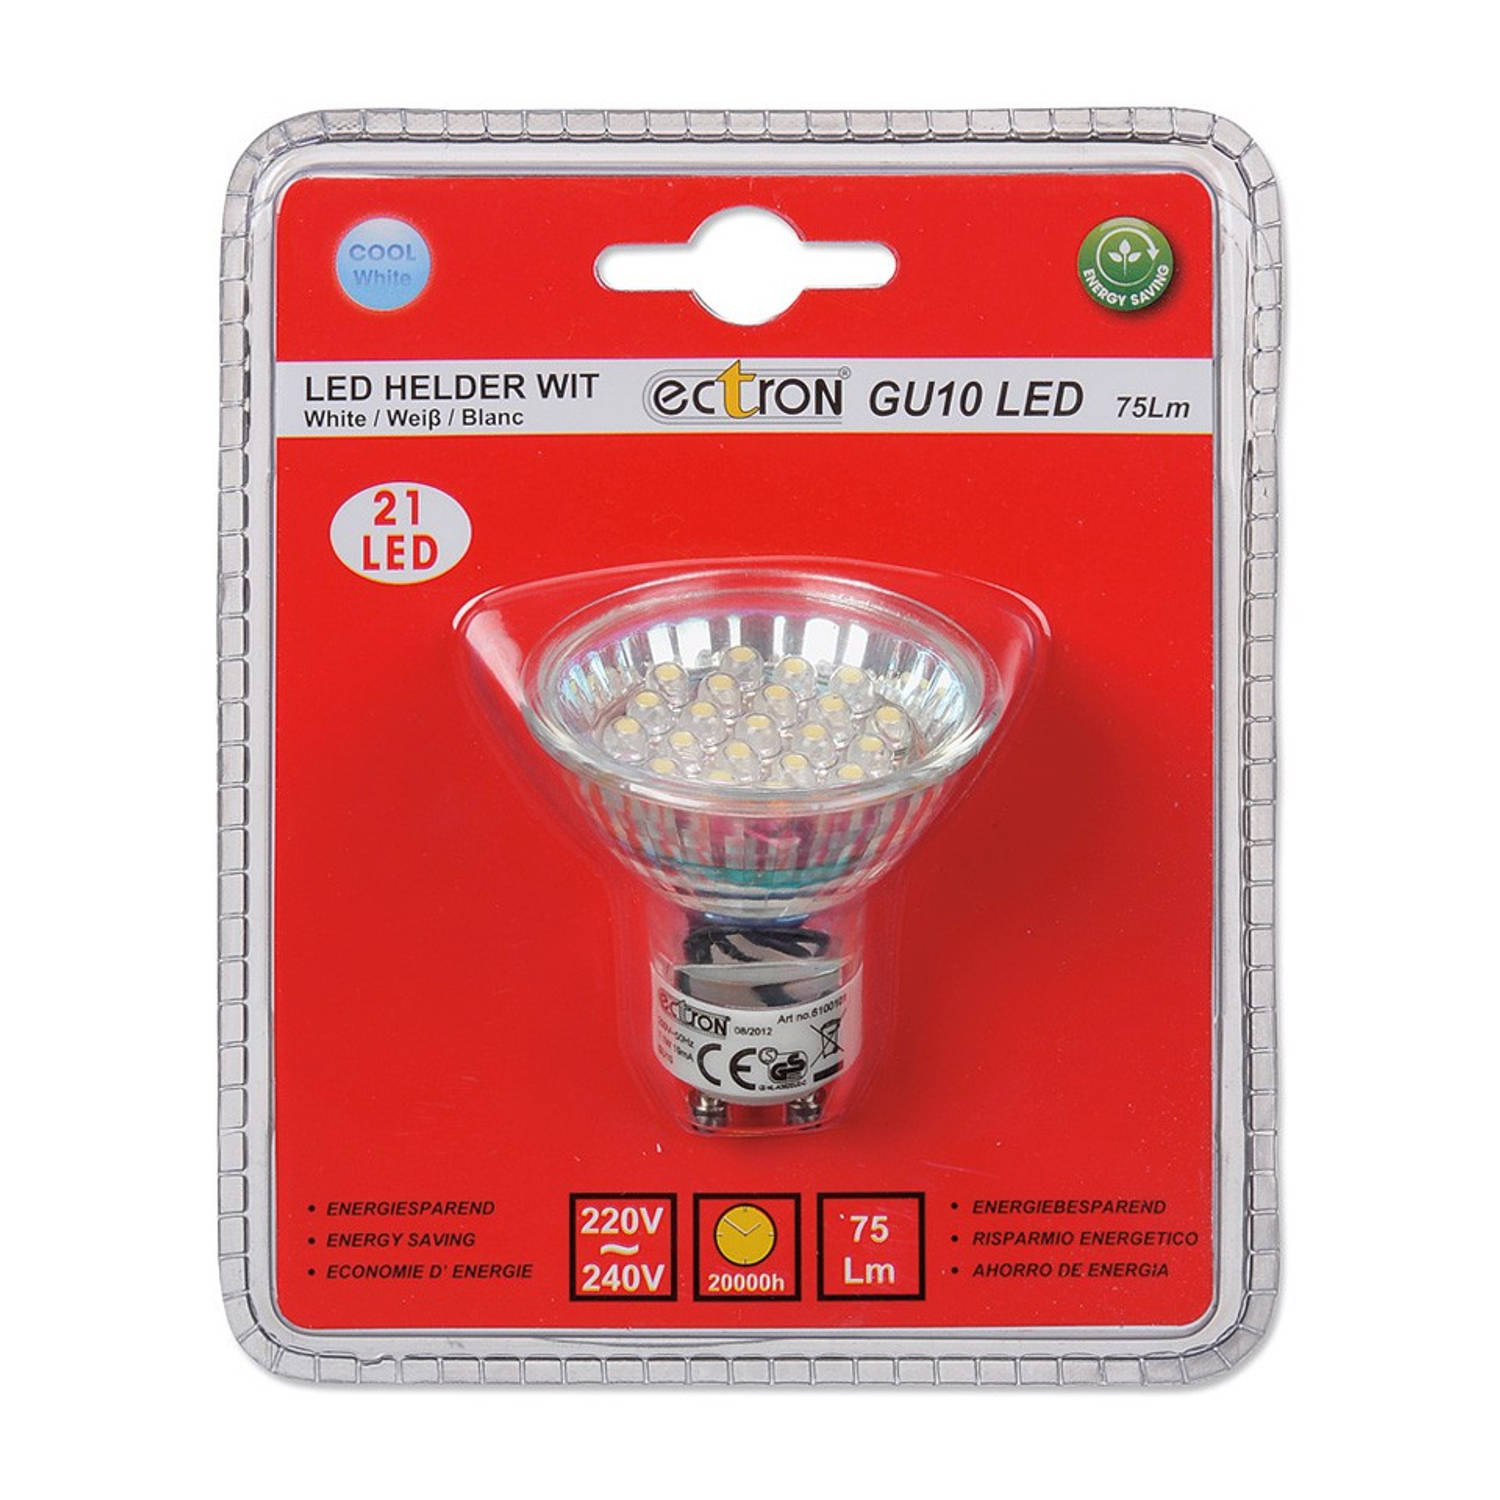 Vooruitzien Defilé Bedankt Ectron GU10 21 LEDS lamp helder wit | Blokker